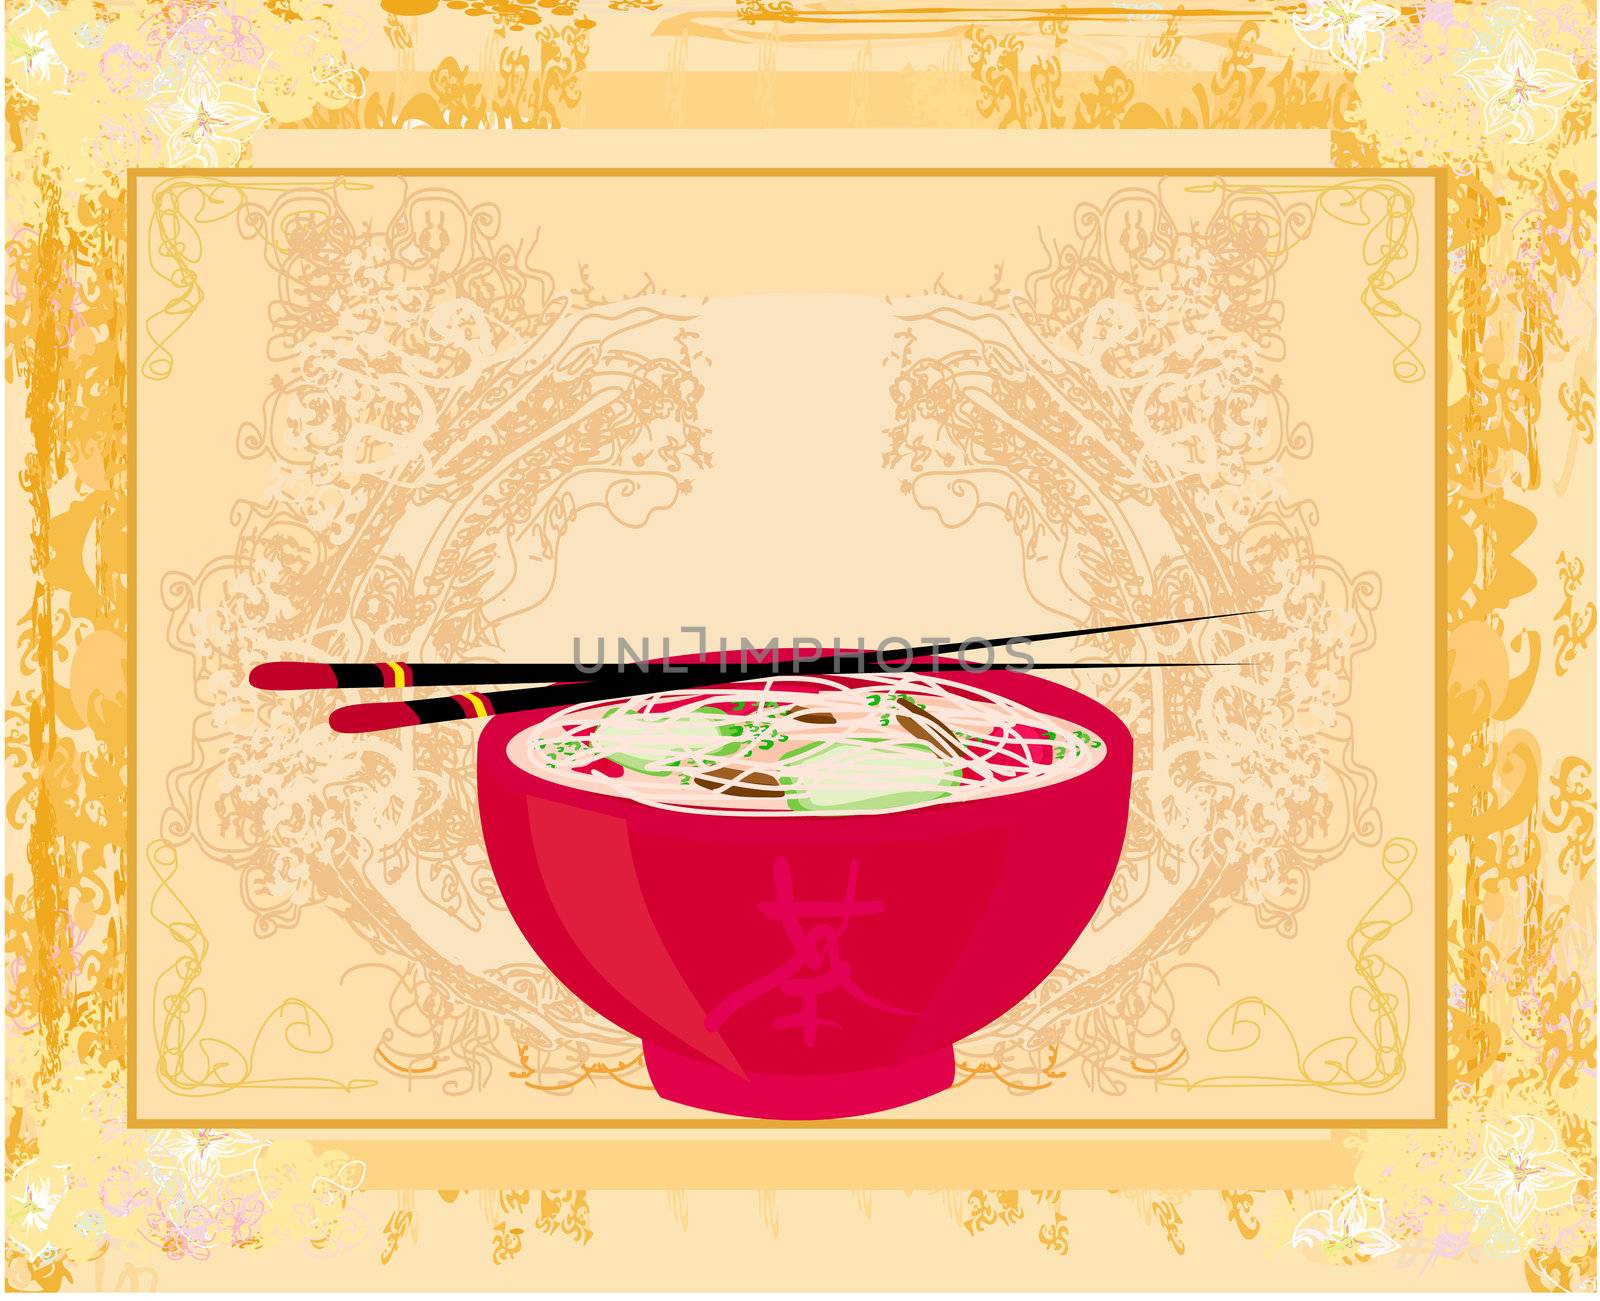 template of traditional Japanese food menu